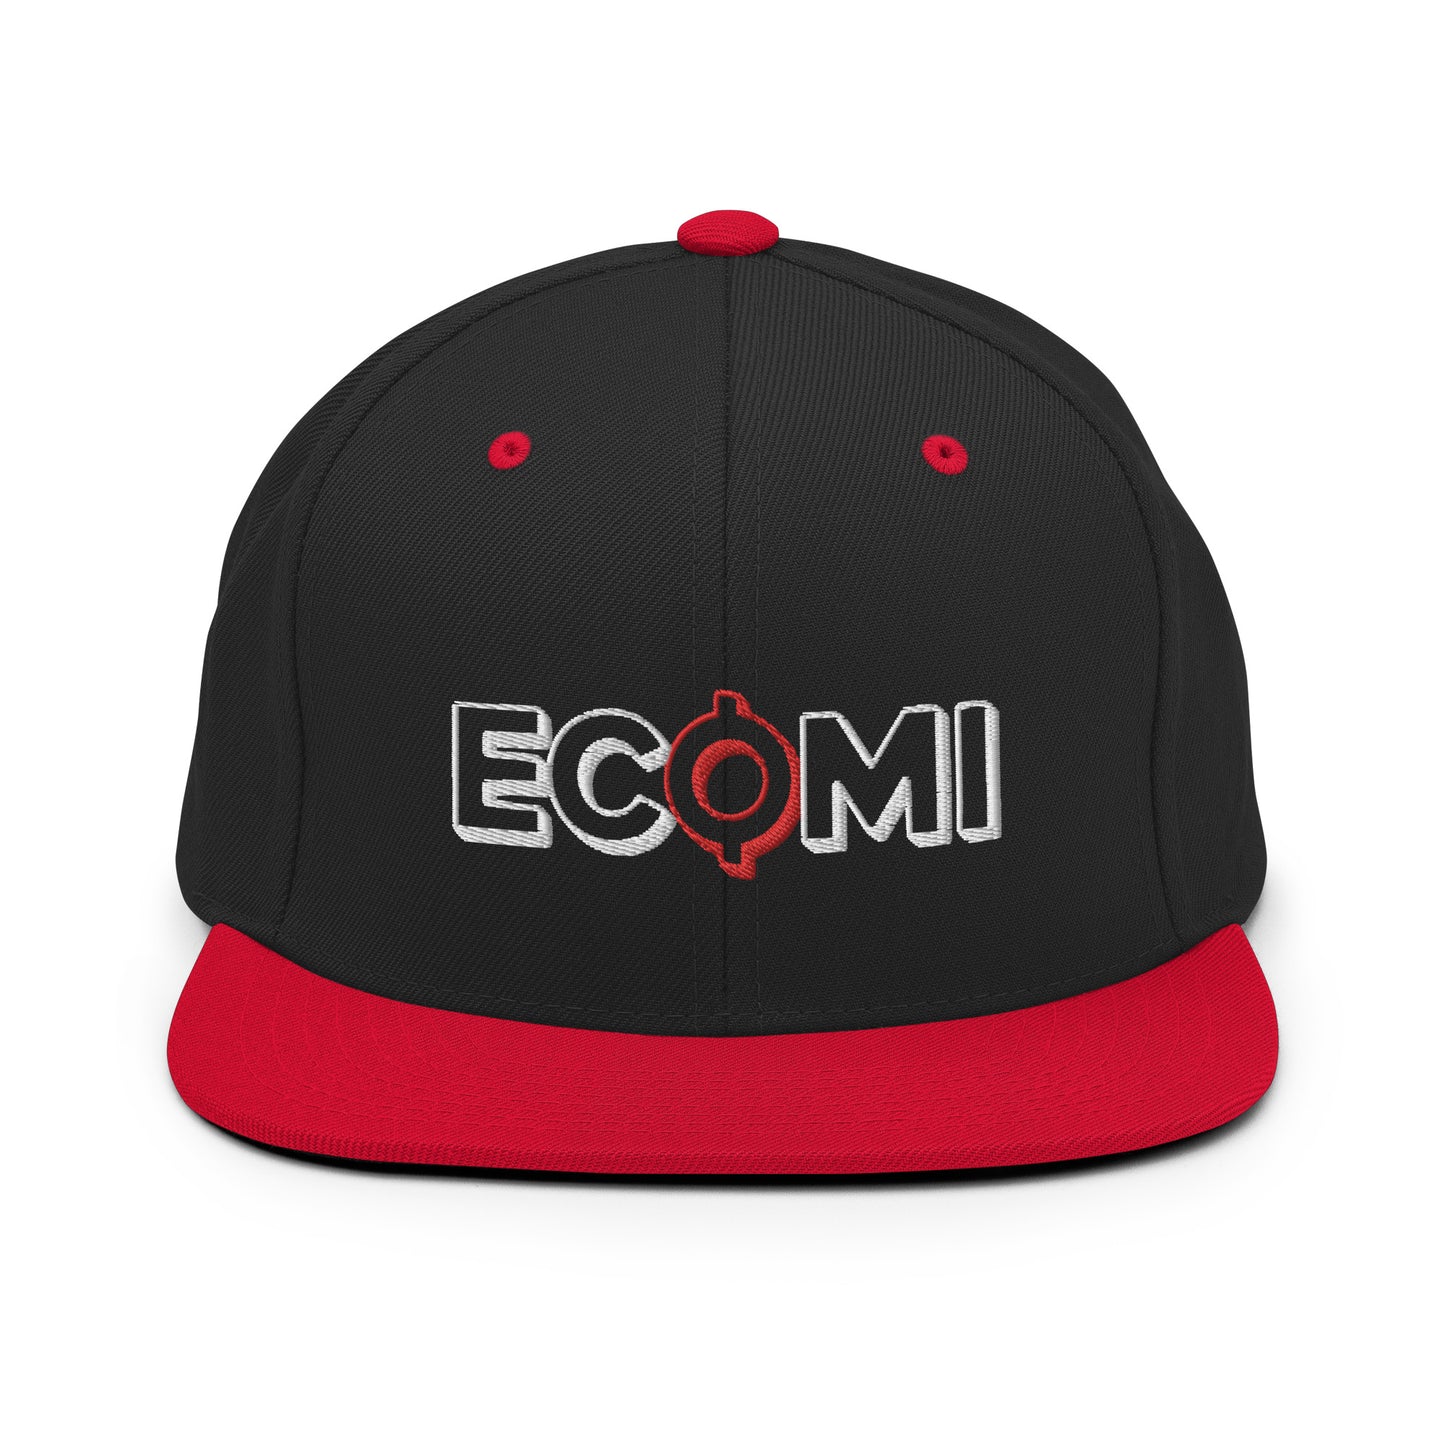 Ecomi Snapback Hat.